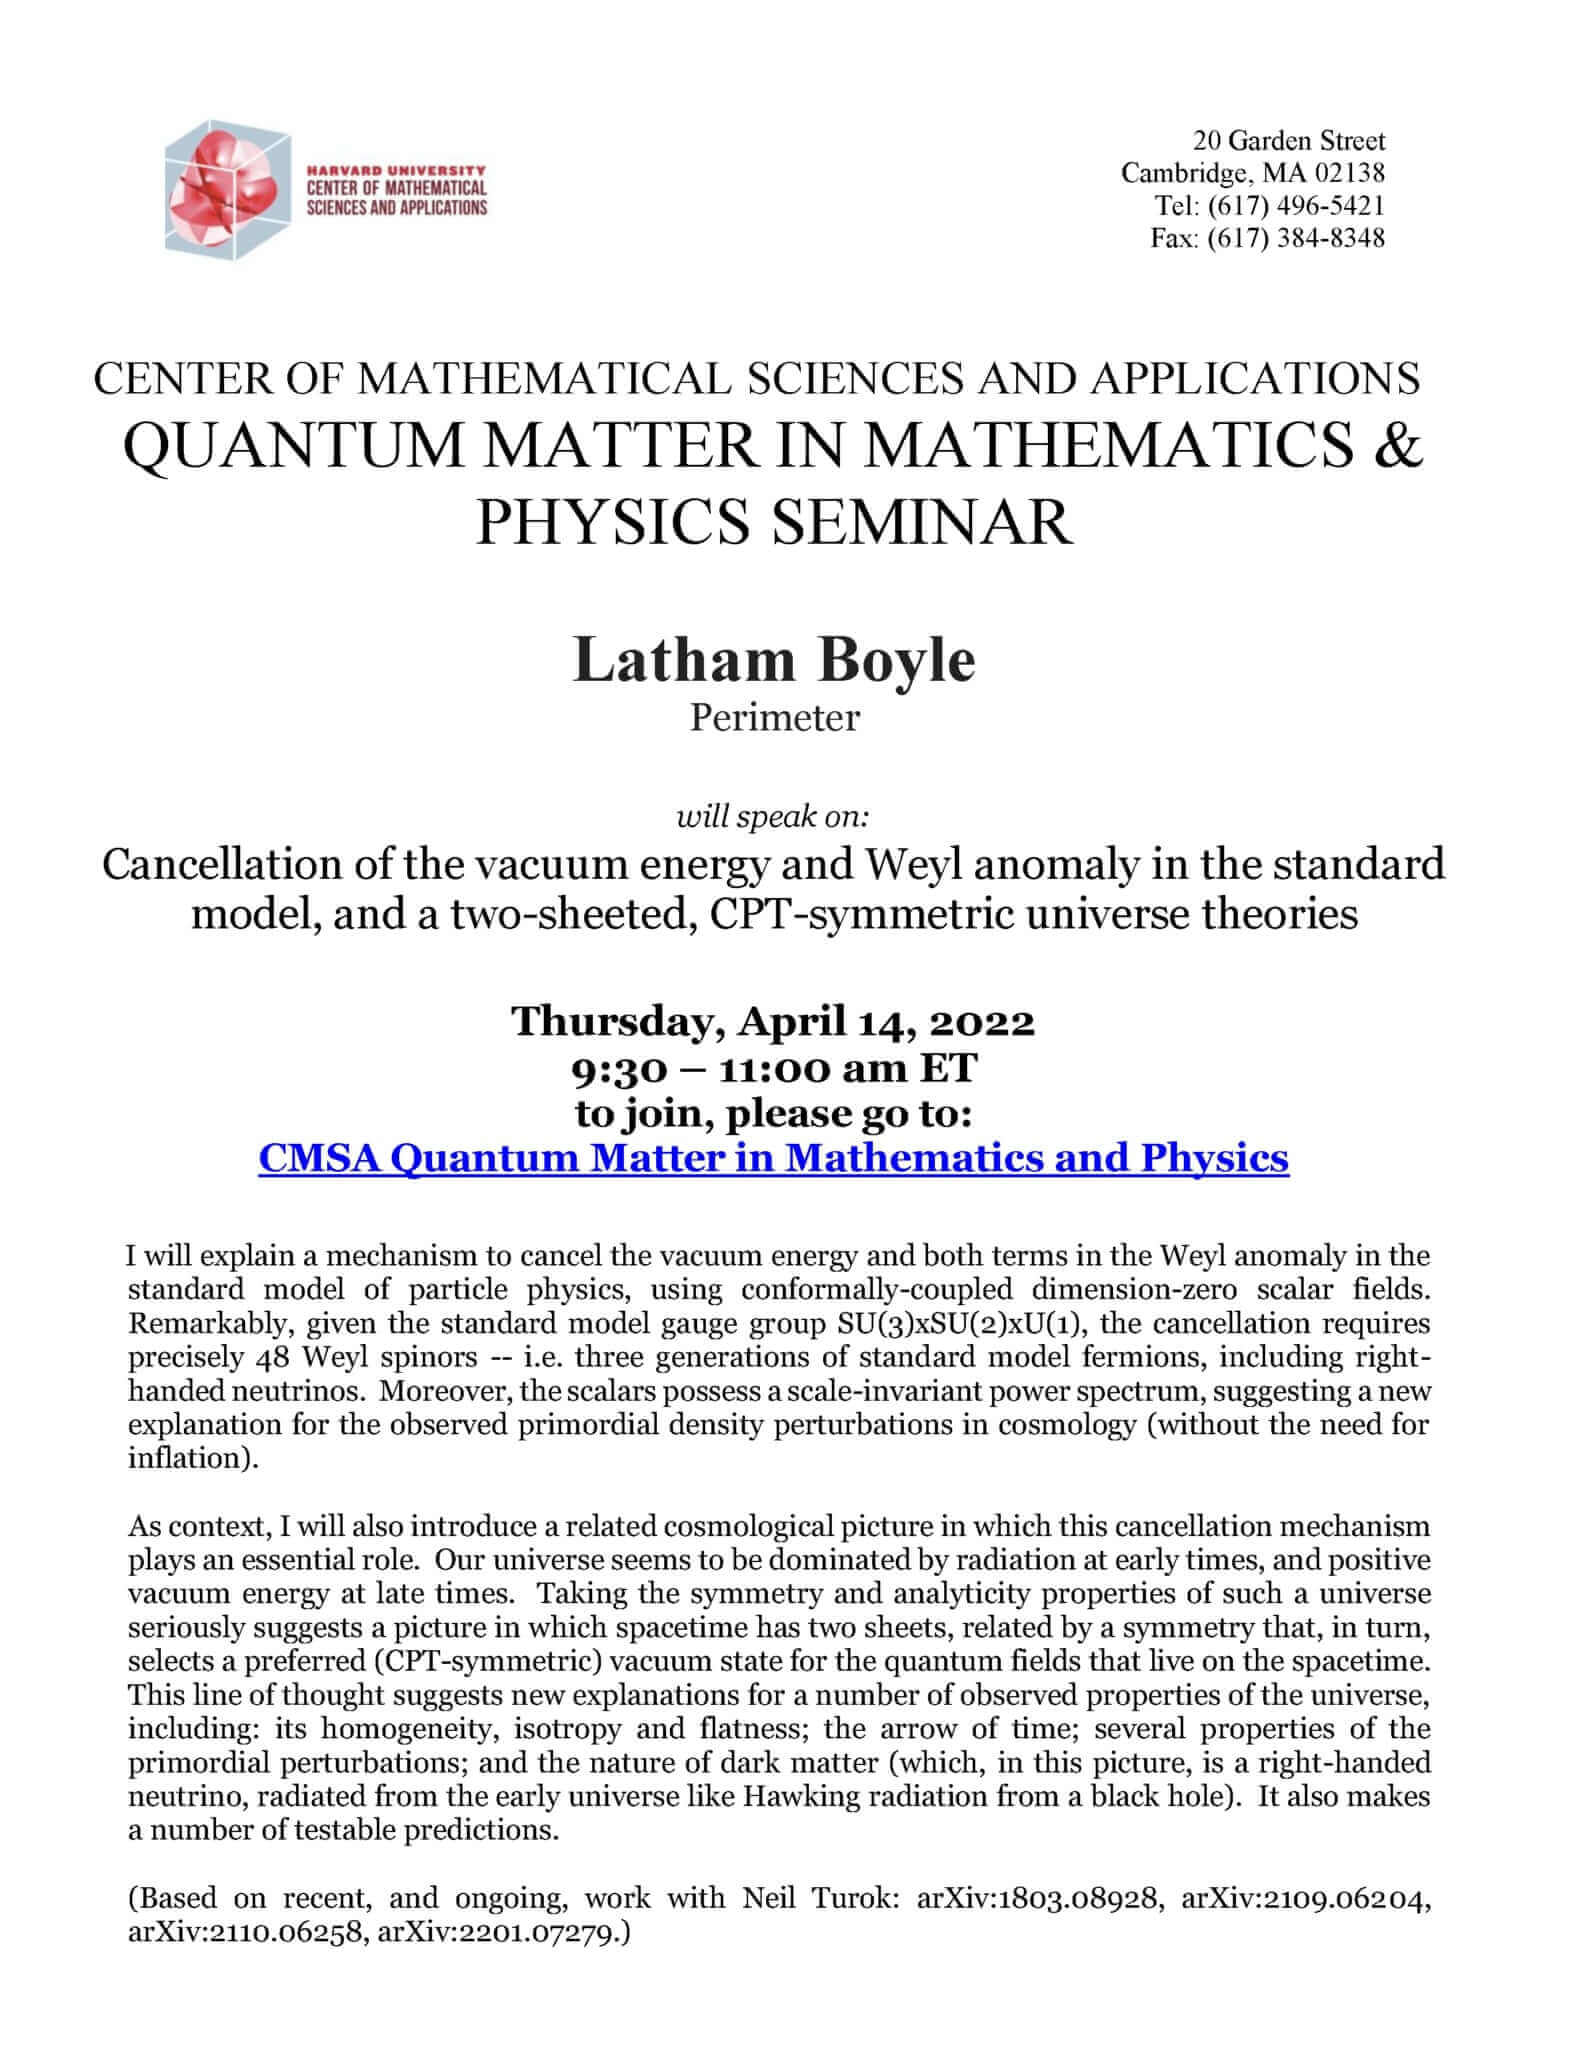 CMSA-QMMP-Seminar-04.14.22-1583x2048-1